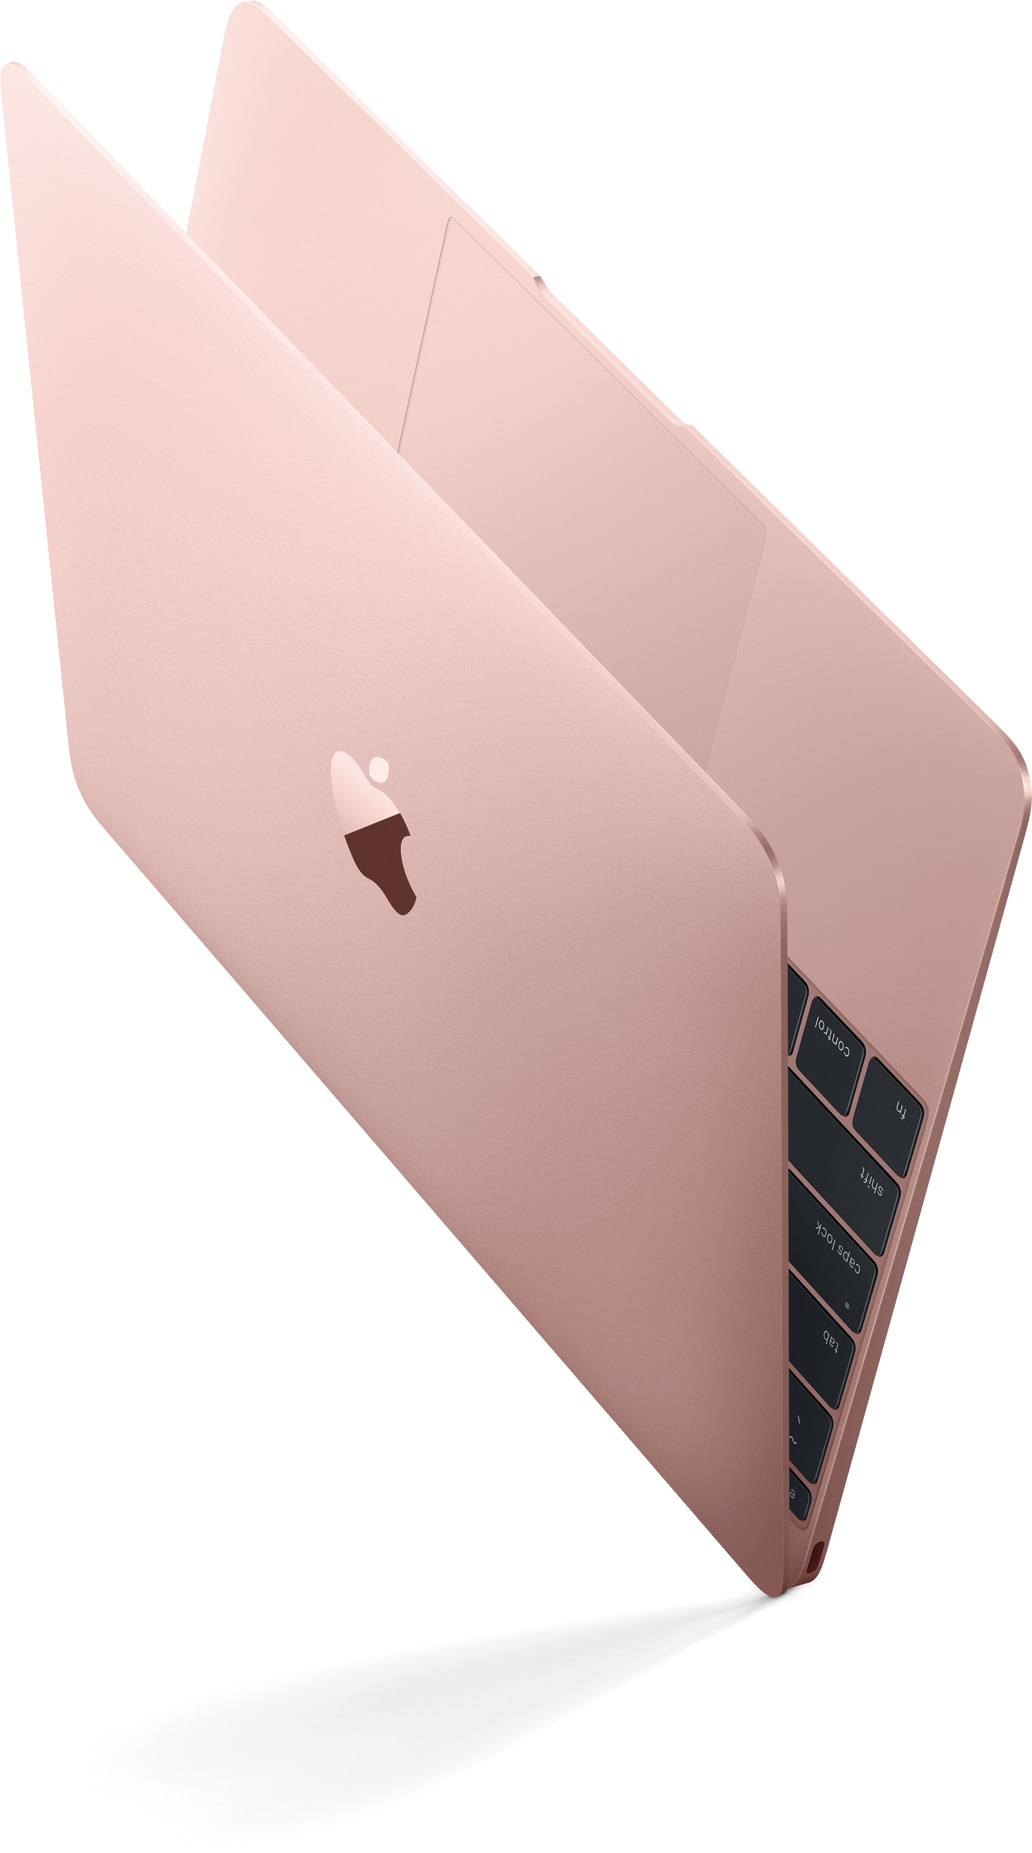 MacBook ouro rosa inclinado na diagonal e de lado